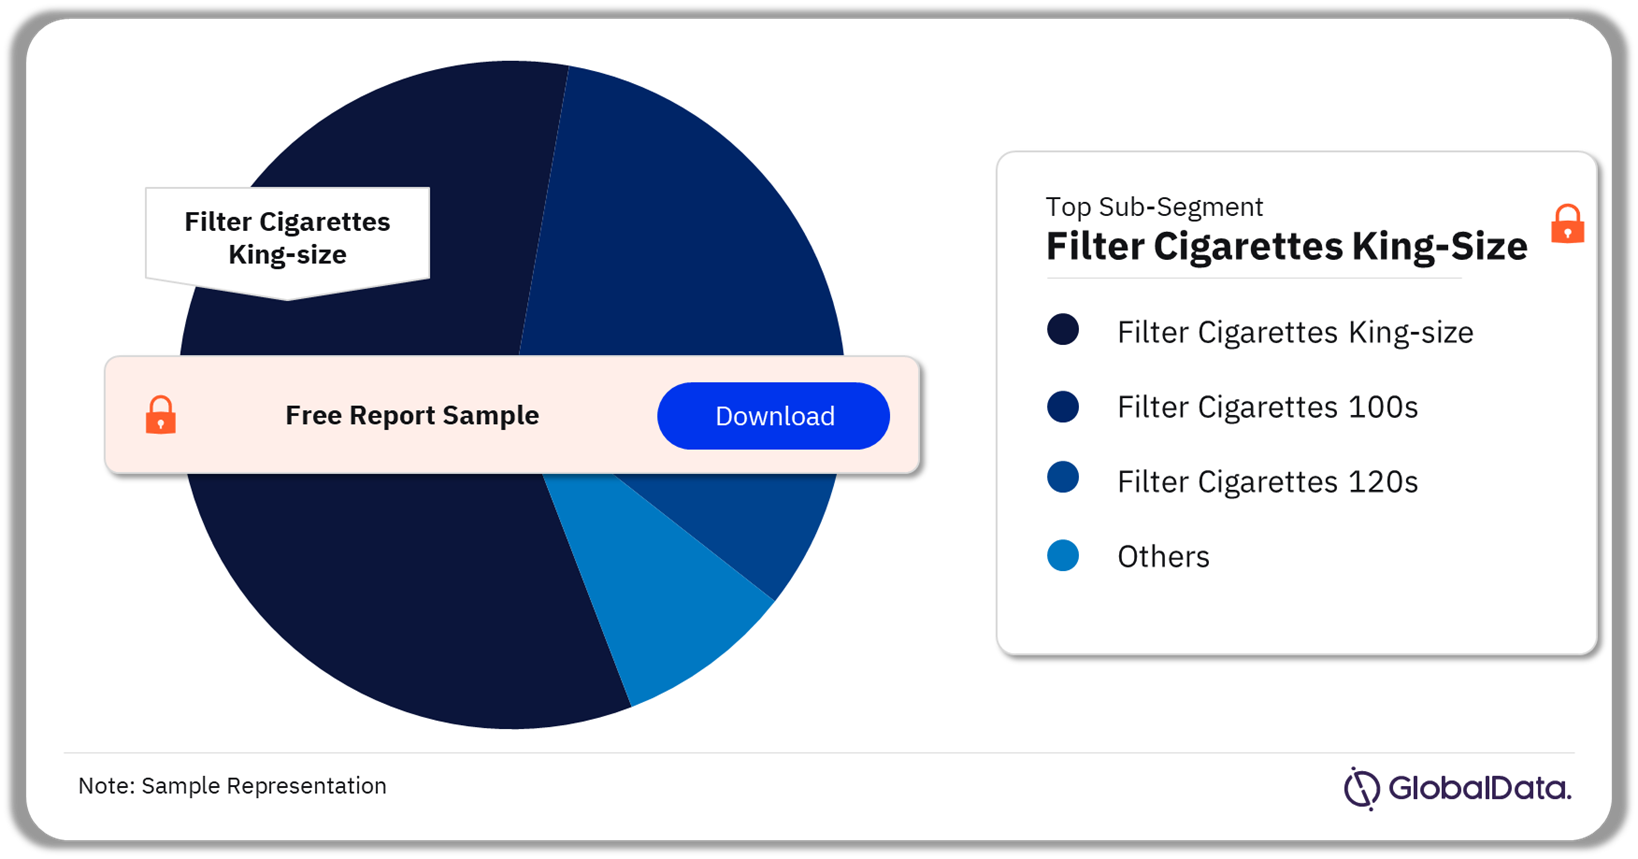 Singapore Filter Cigarettes Market Analysis by Sub-Segments, 2022 (%)